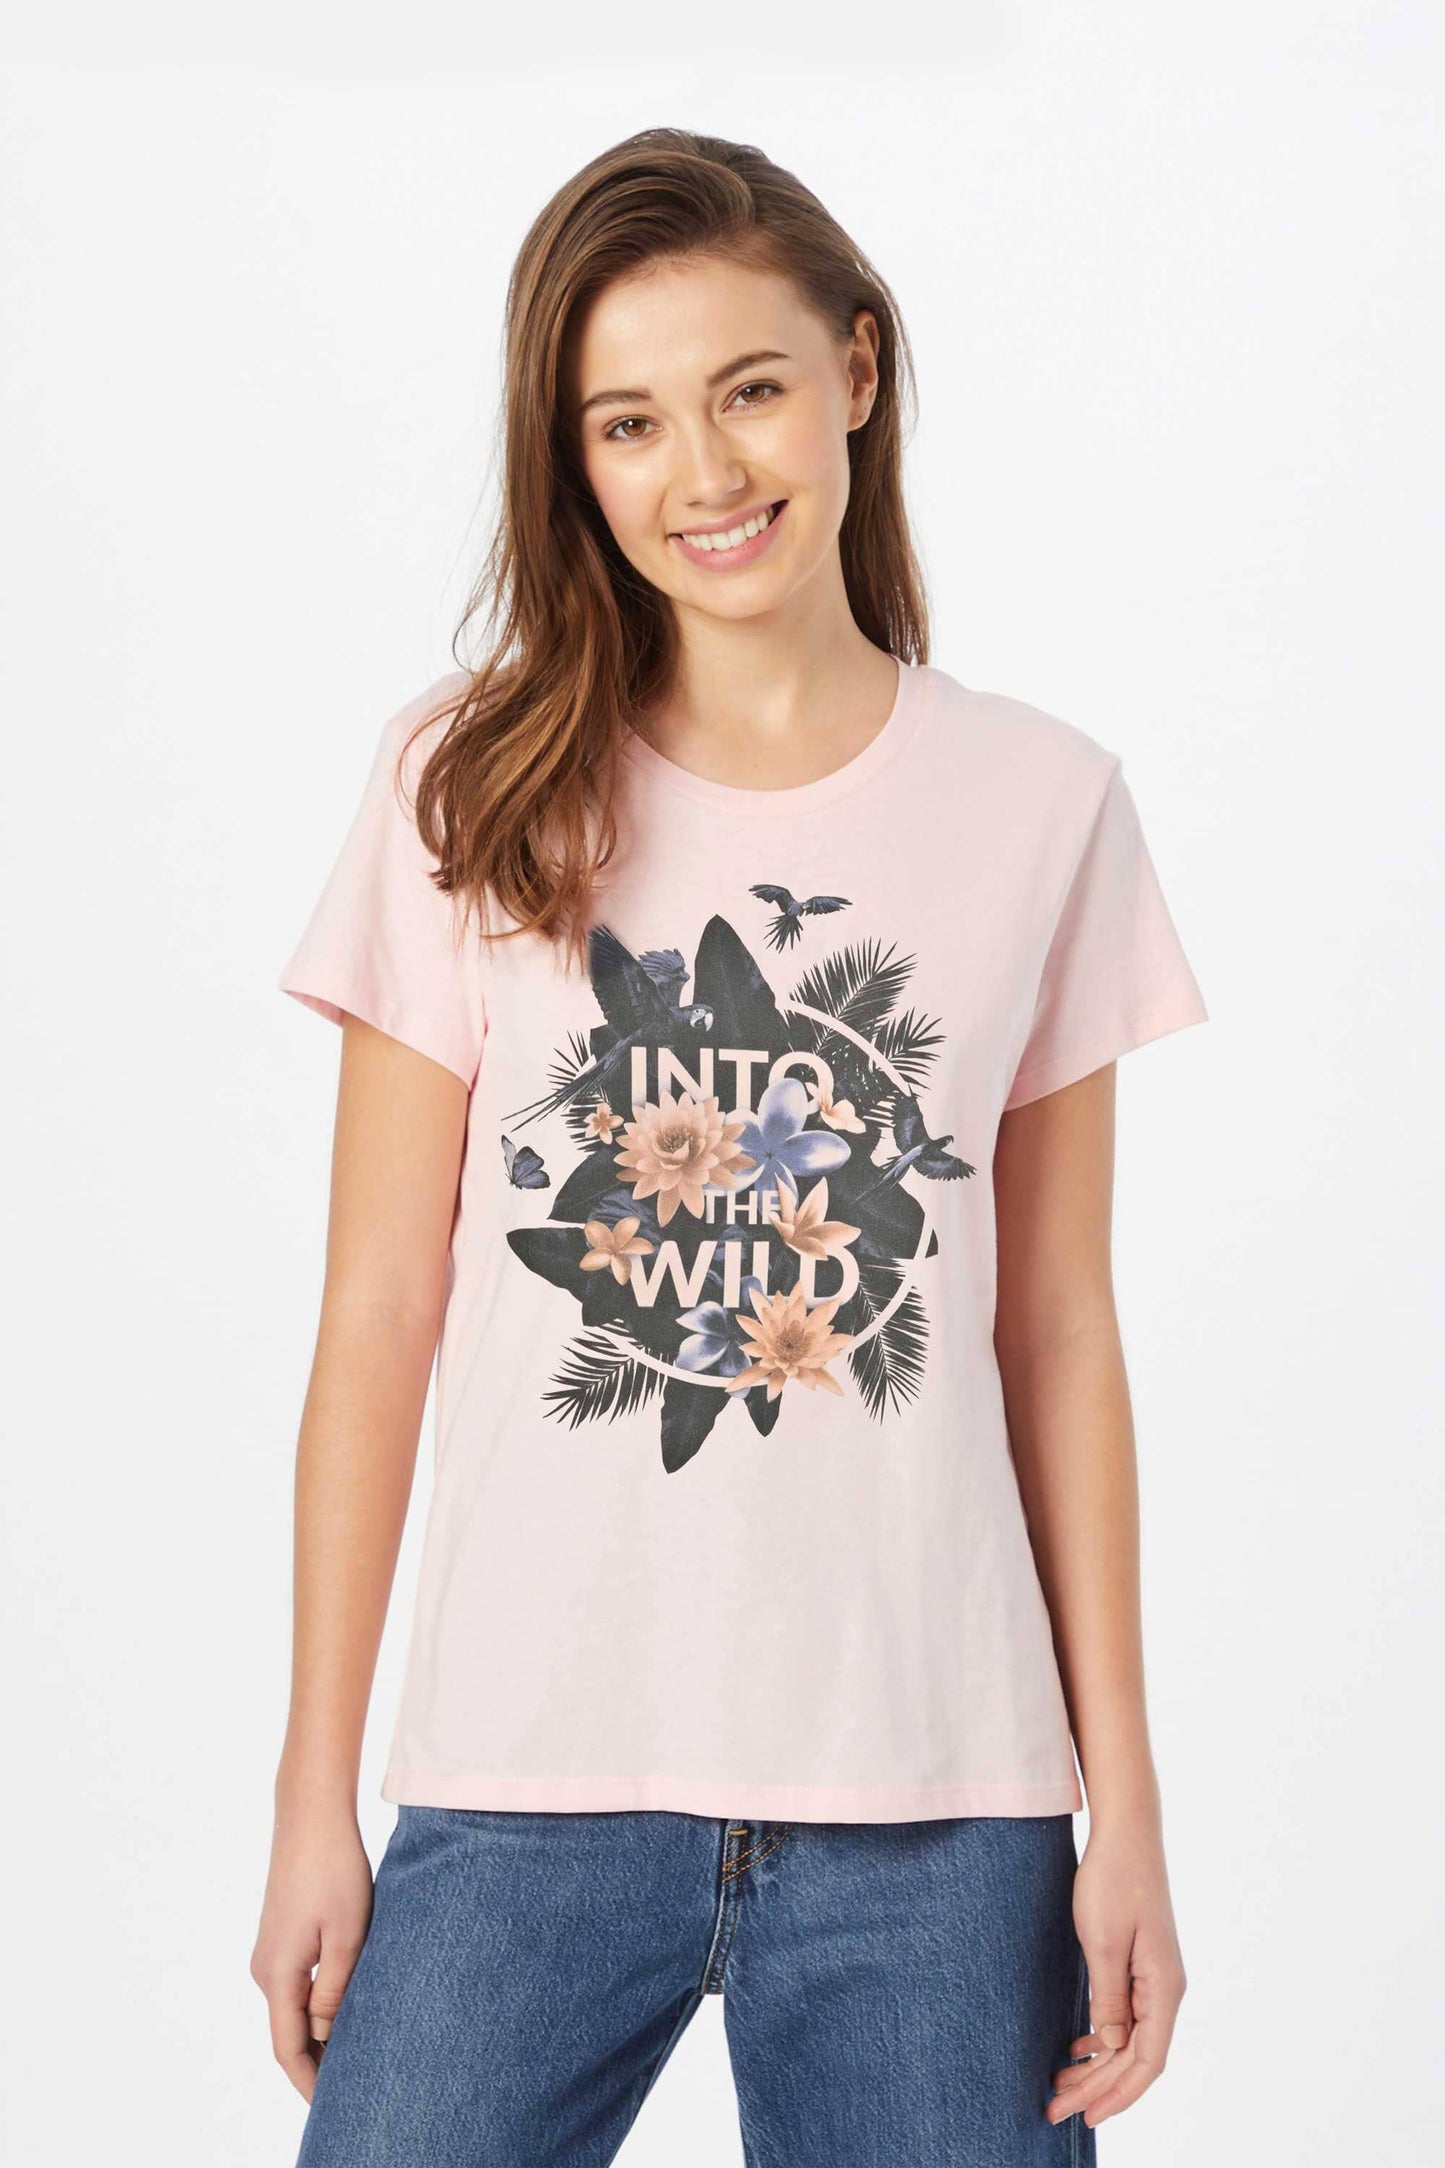 Madamadam Women's Into The Wild Printed Short Sleeve Tee Shirt